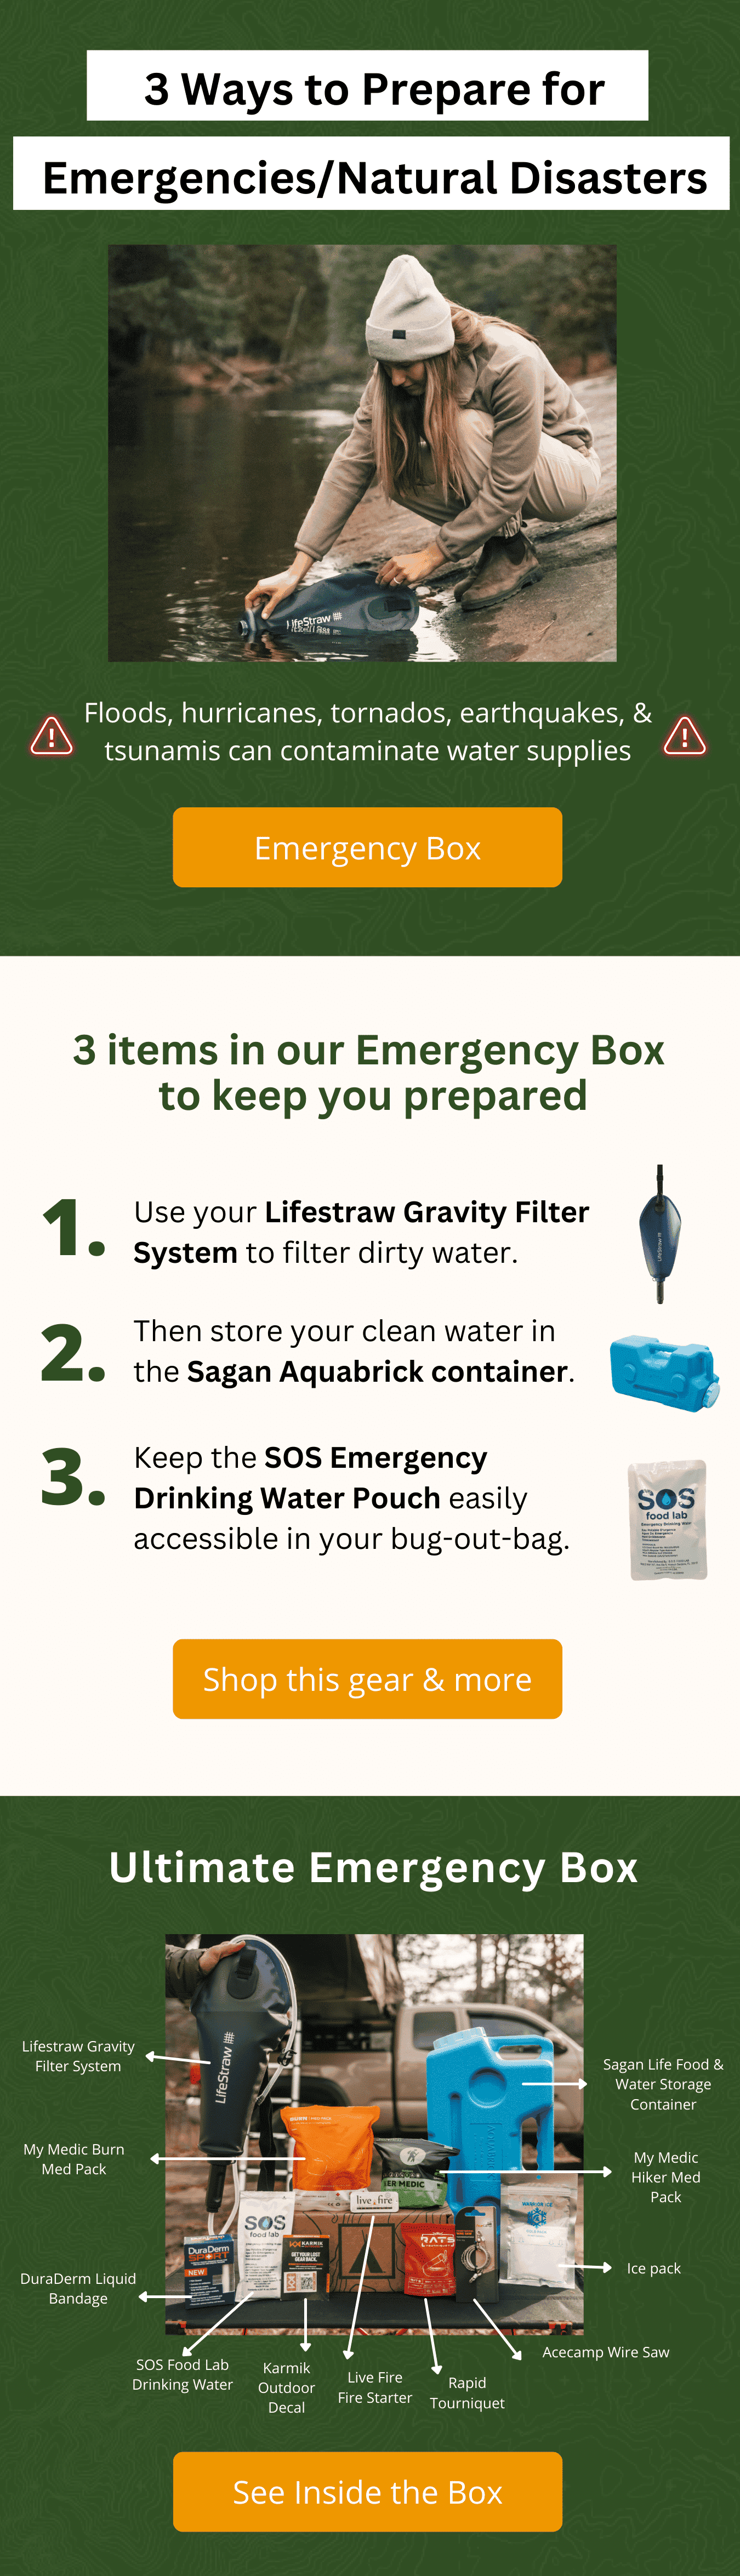 3 ways to prepare for emergencies!